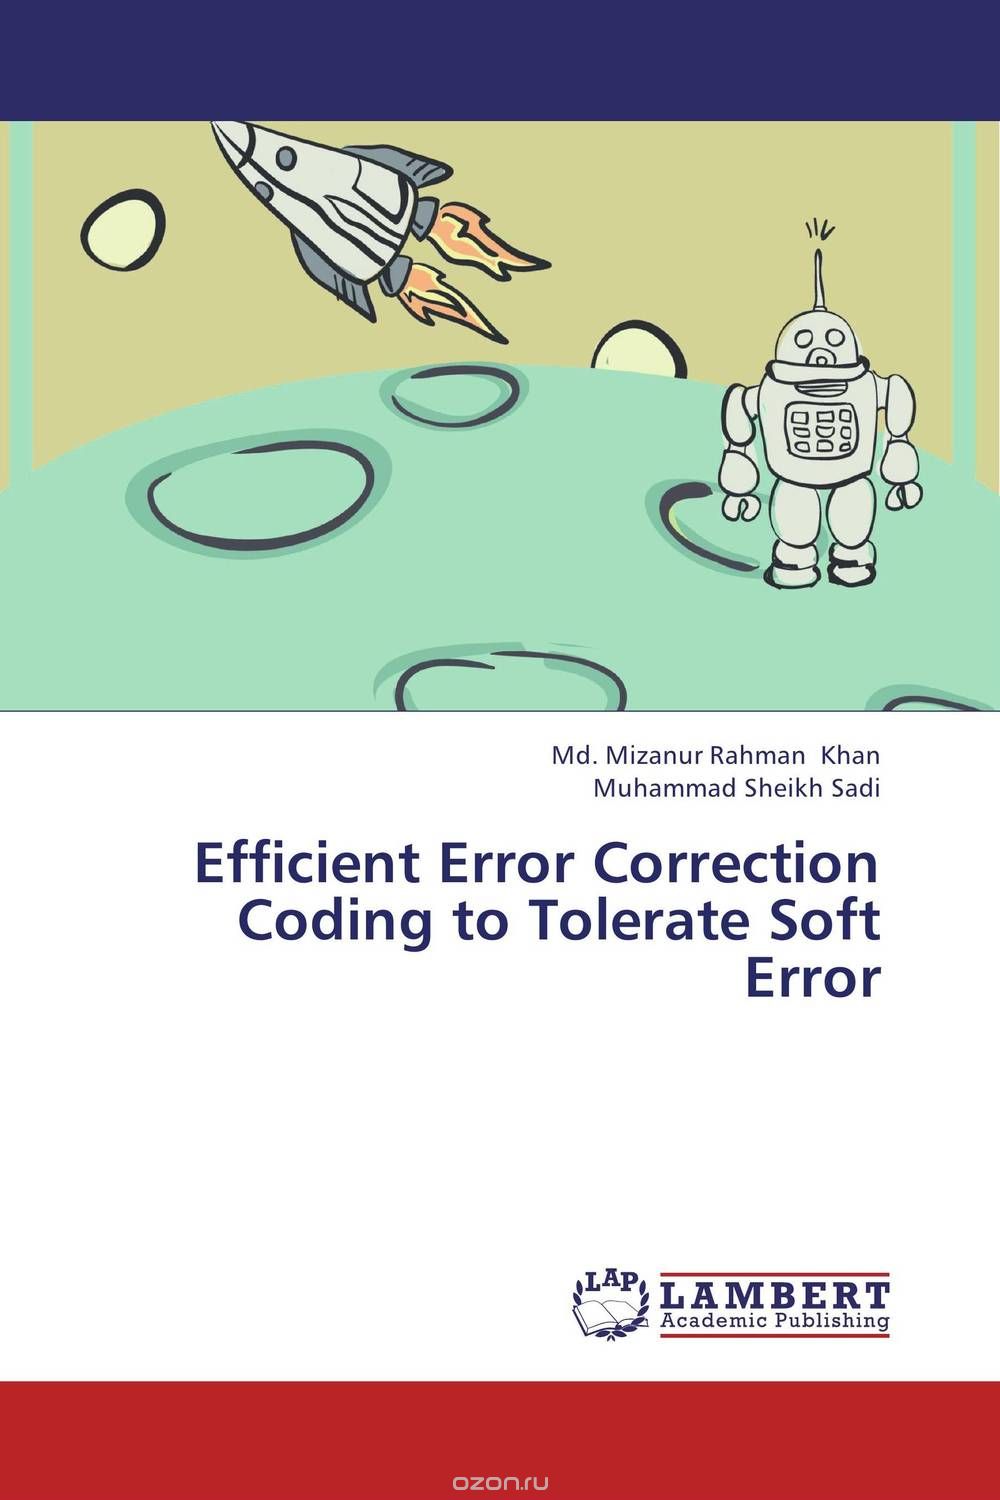 Скачать книгу "Efficient Error Correction Coding to Tolerate Soft Error"